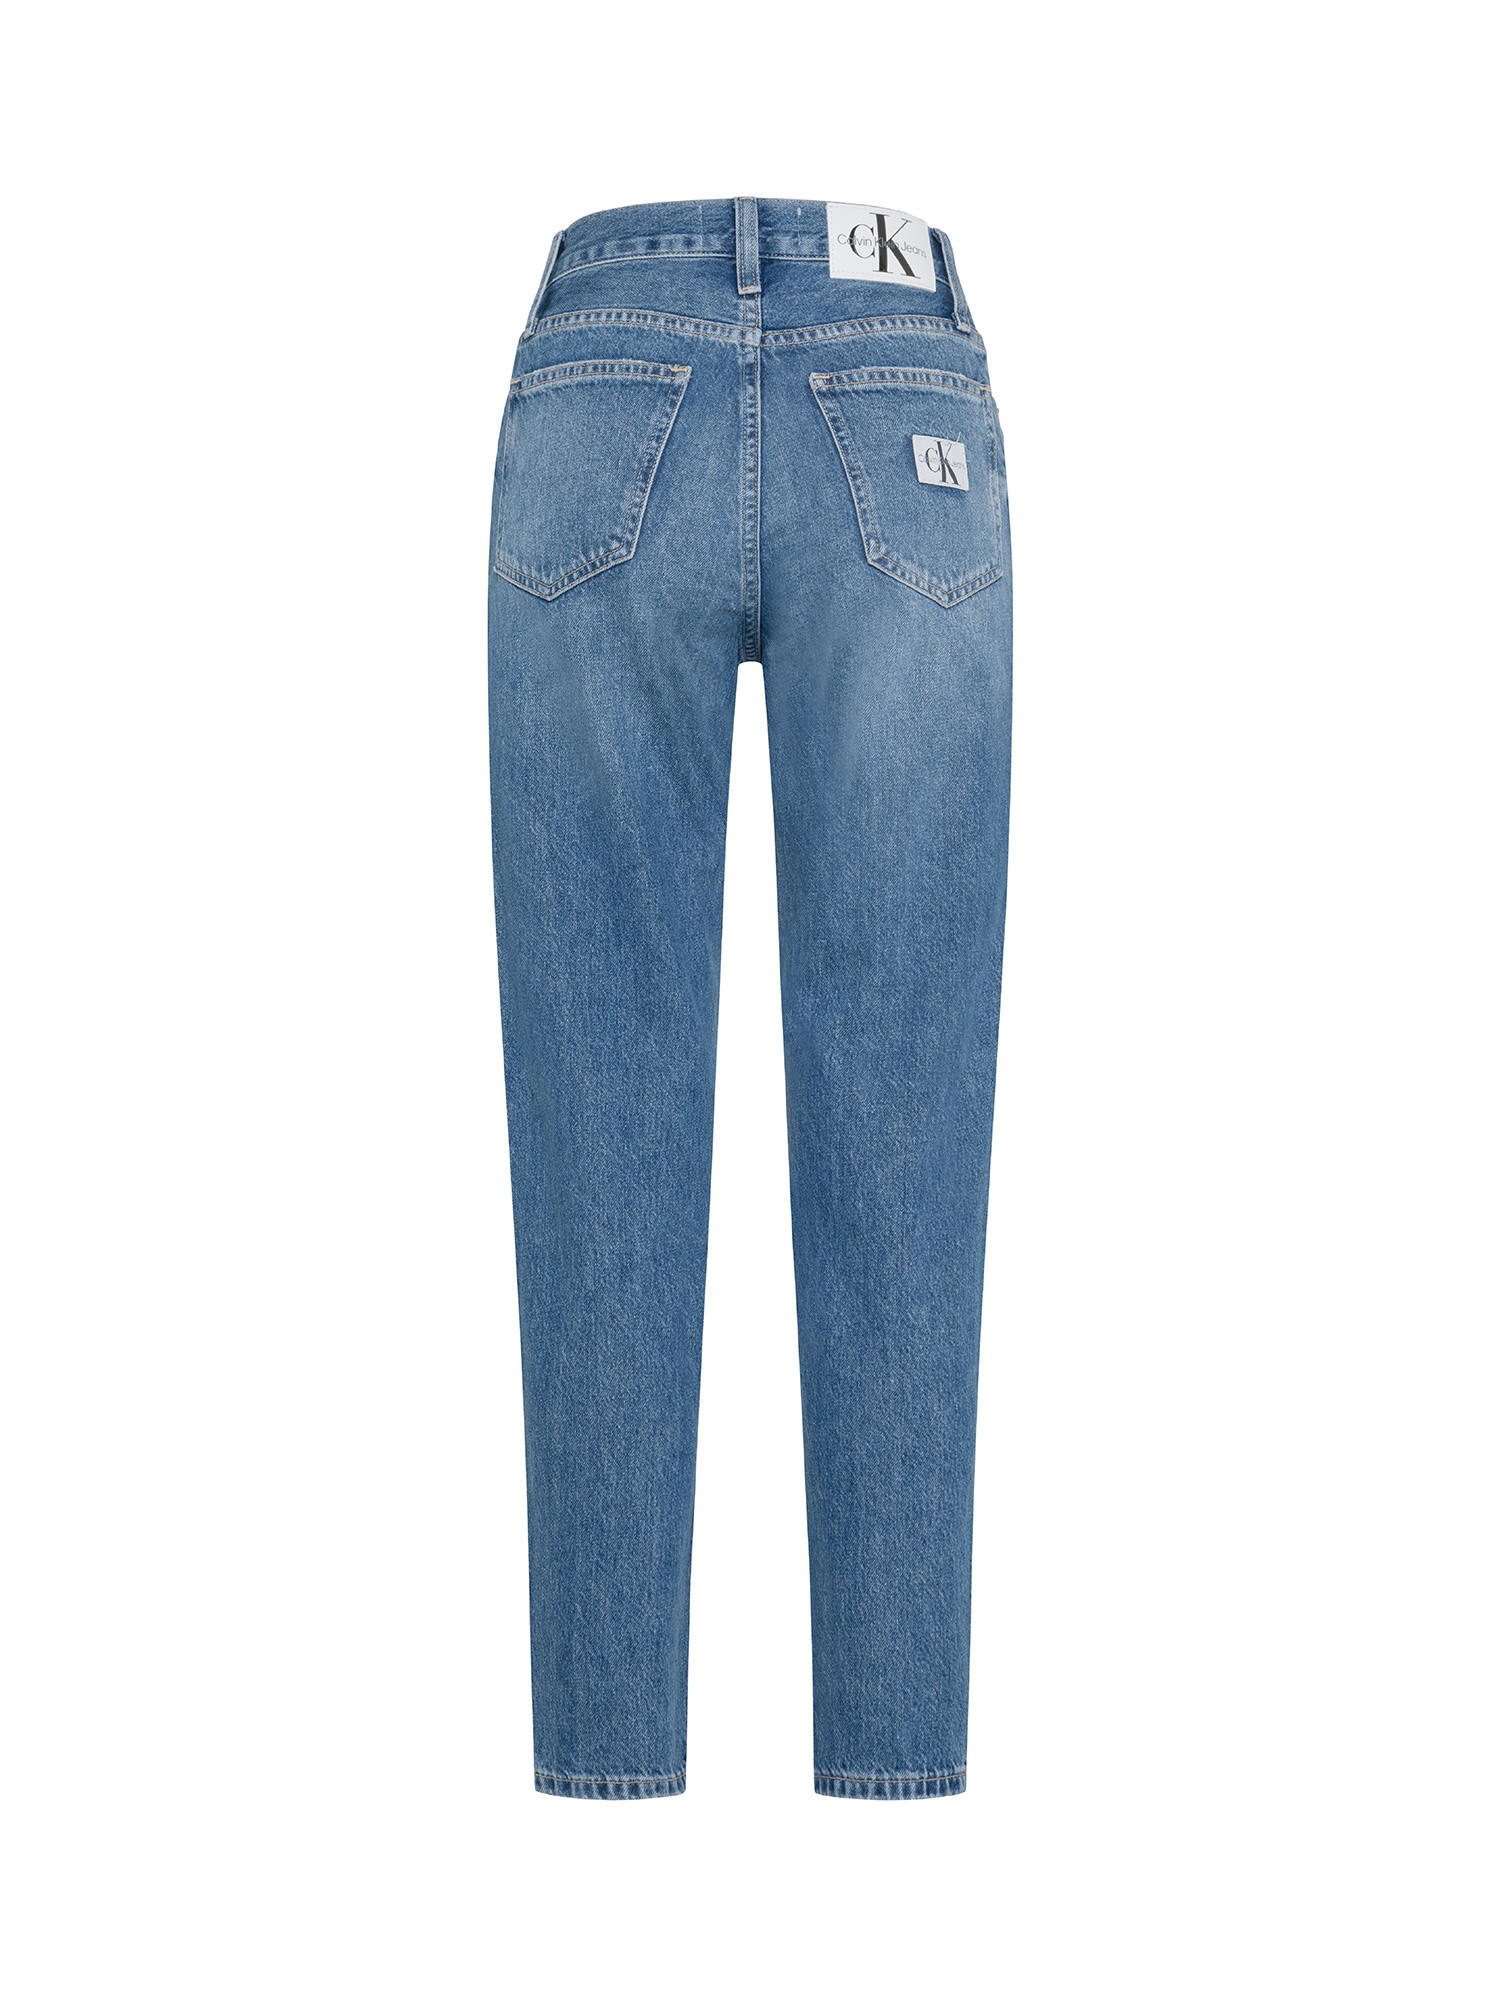 Calvin Klein Jeans - Mom jeans, Blue, large image number 1